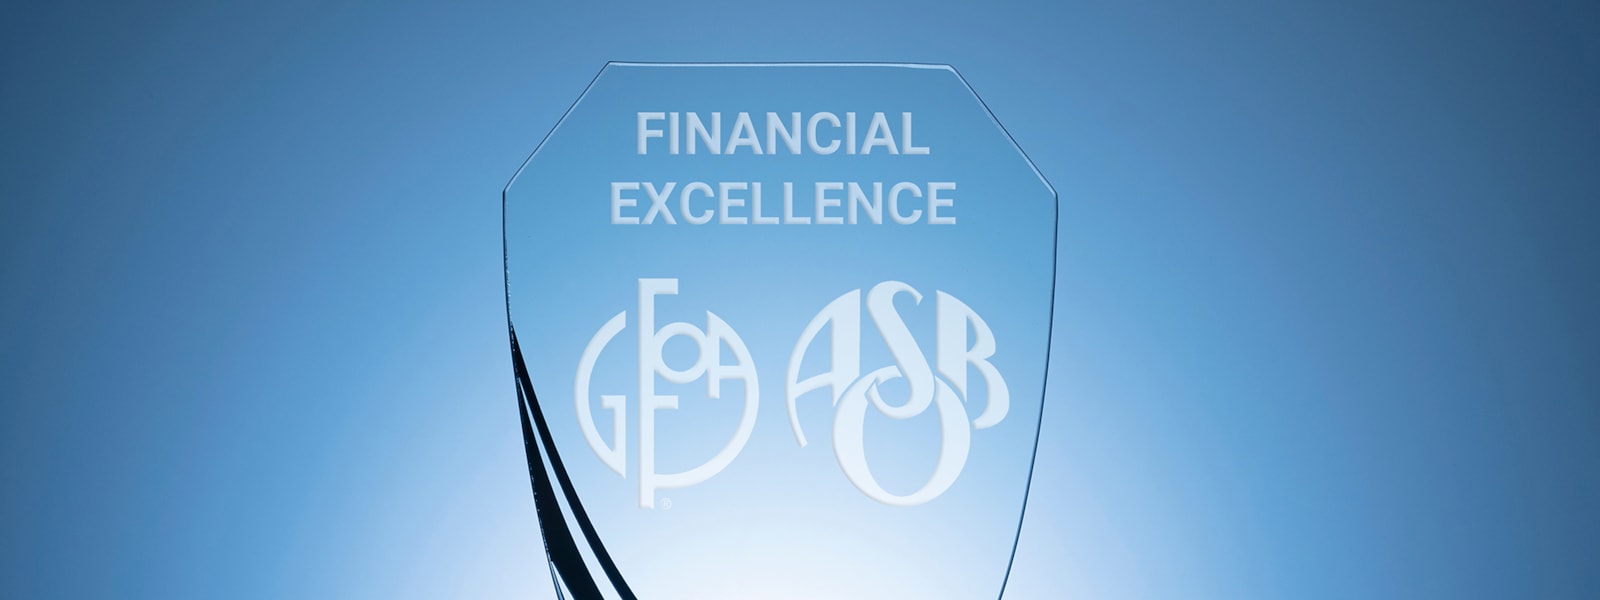 Financial Excellence awards